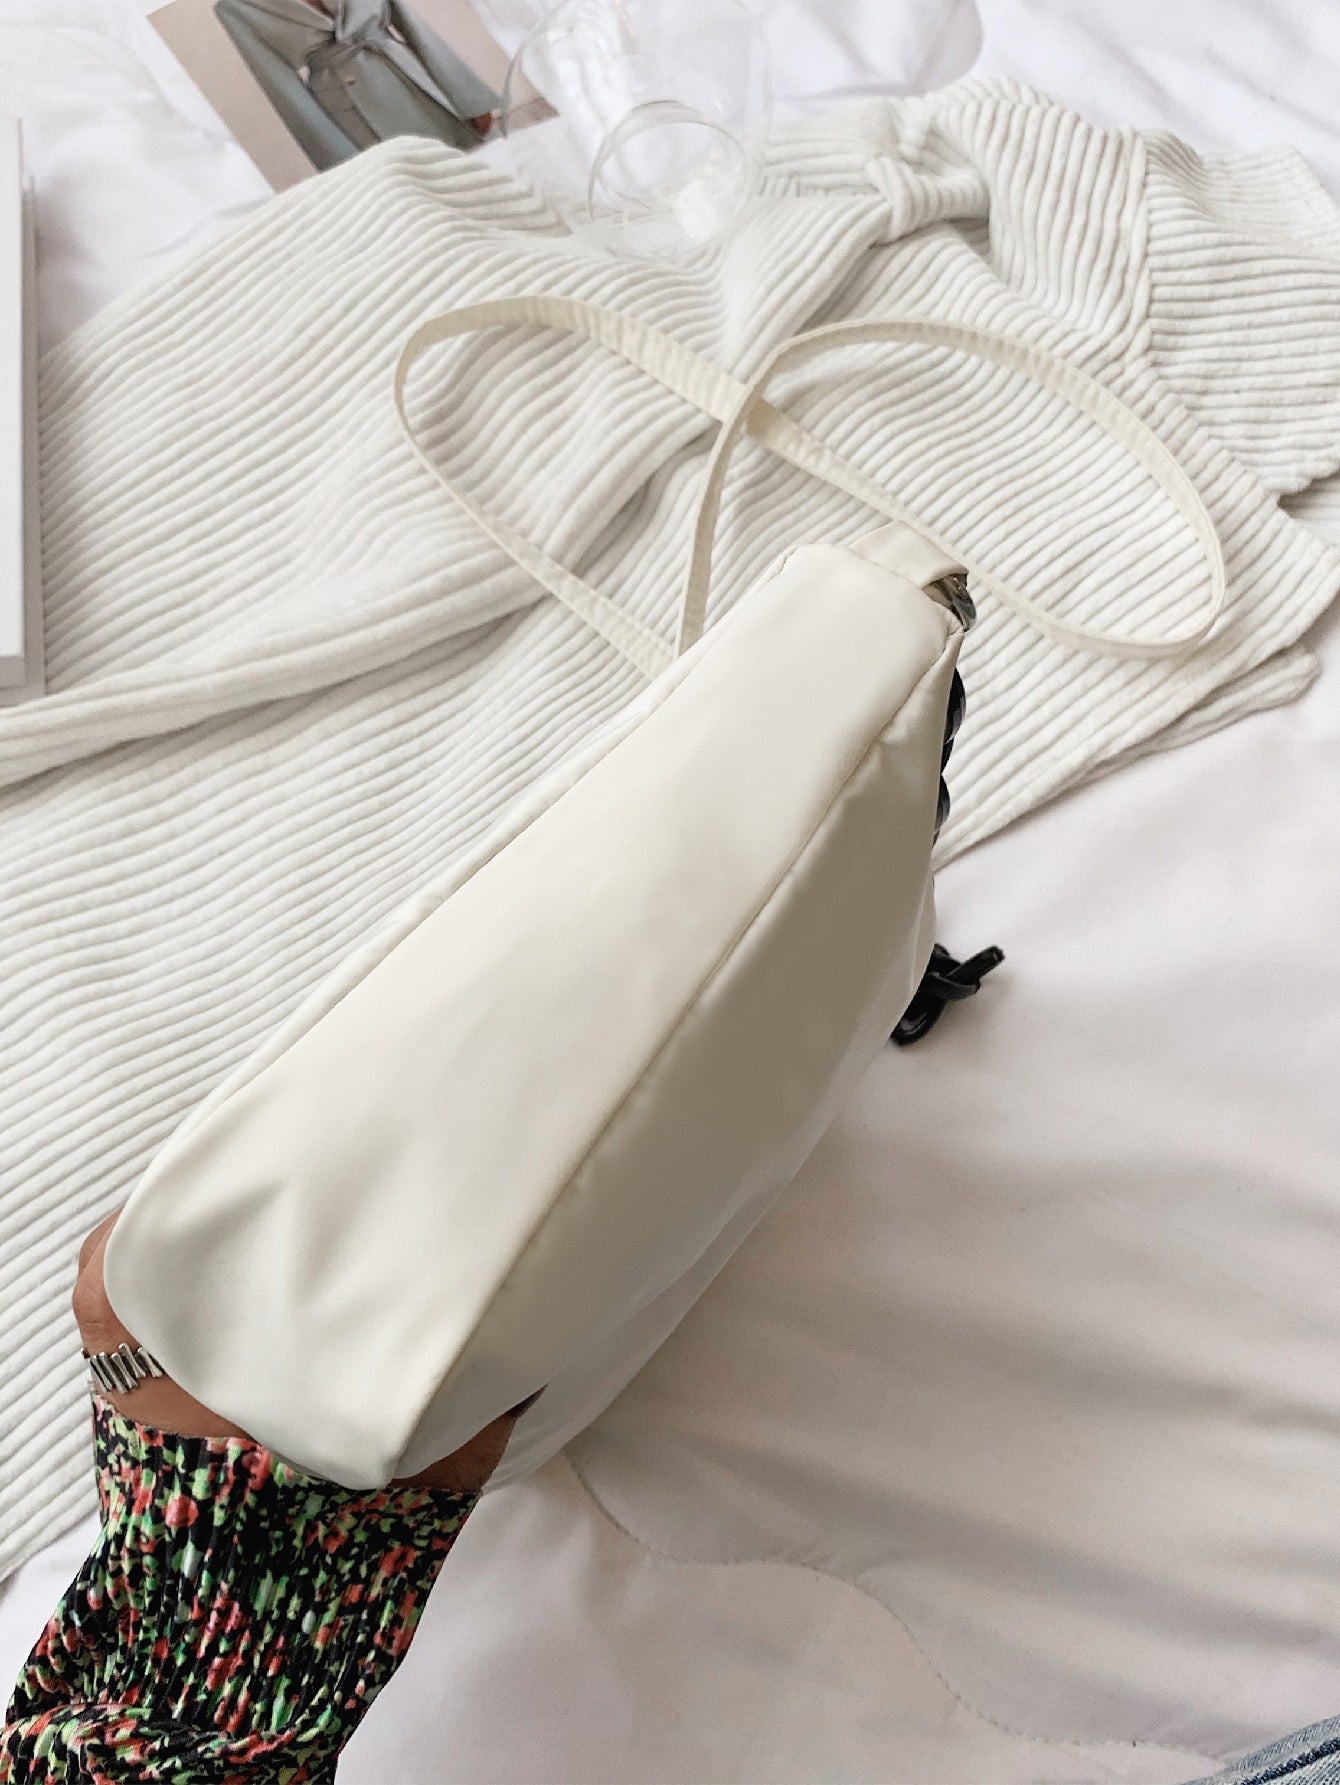 Minimalist Chain Shoulder Bag